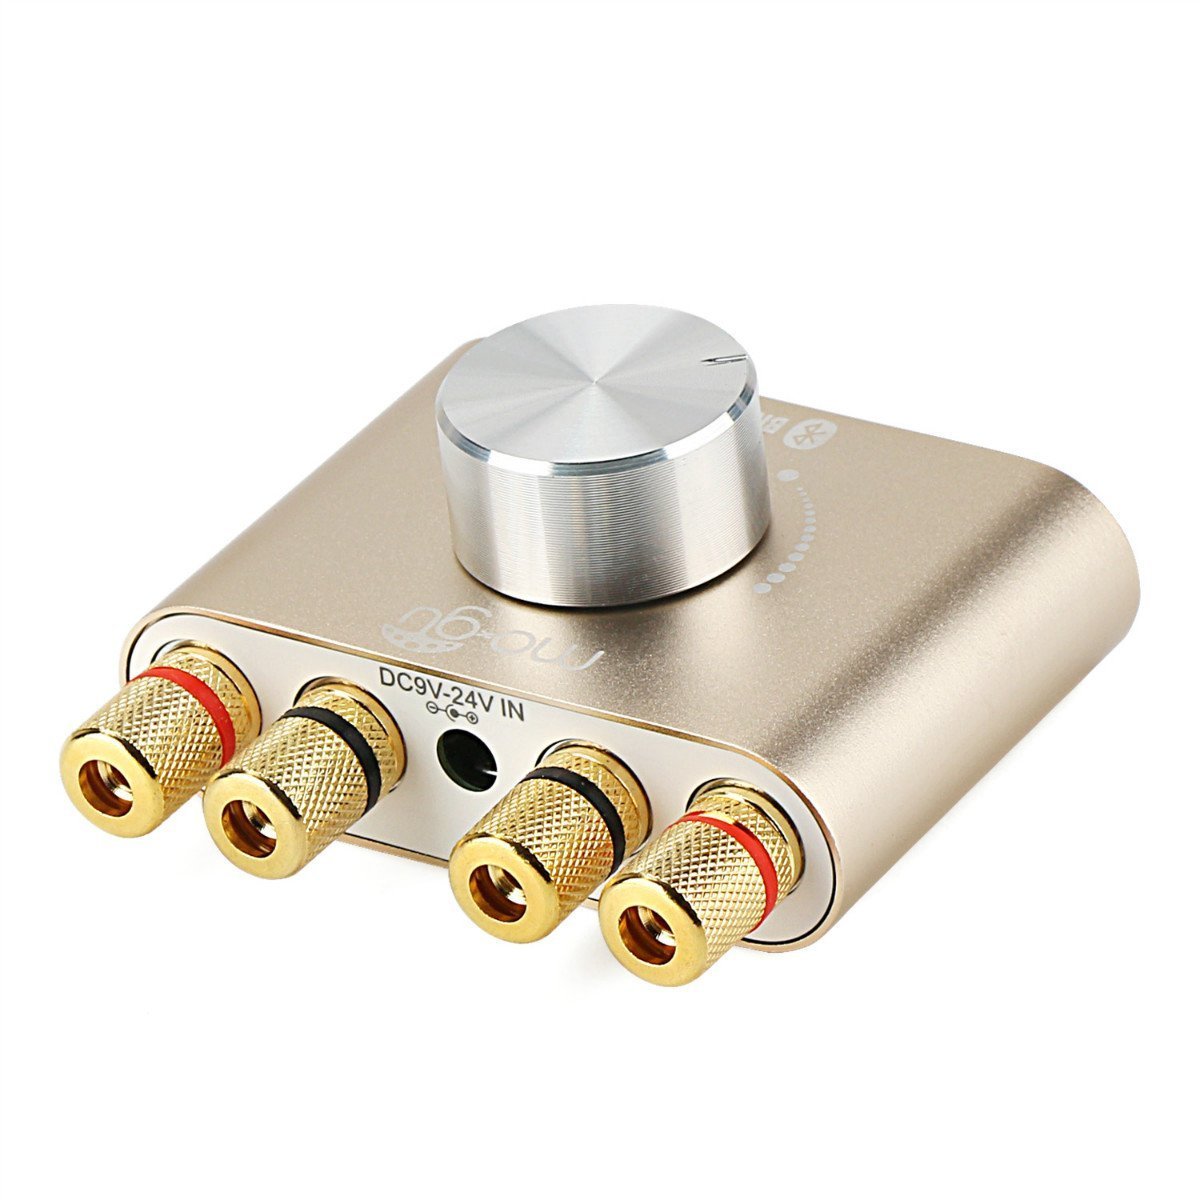 DollaTek TPA3110 30W * 2 Zwei-Kanal Mini-Stereo-Audio drahtlose Bluetooth-Verstärker Digital Signal Endstufe für Tablet PC Smartphone Laptops ect - Gold